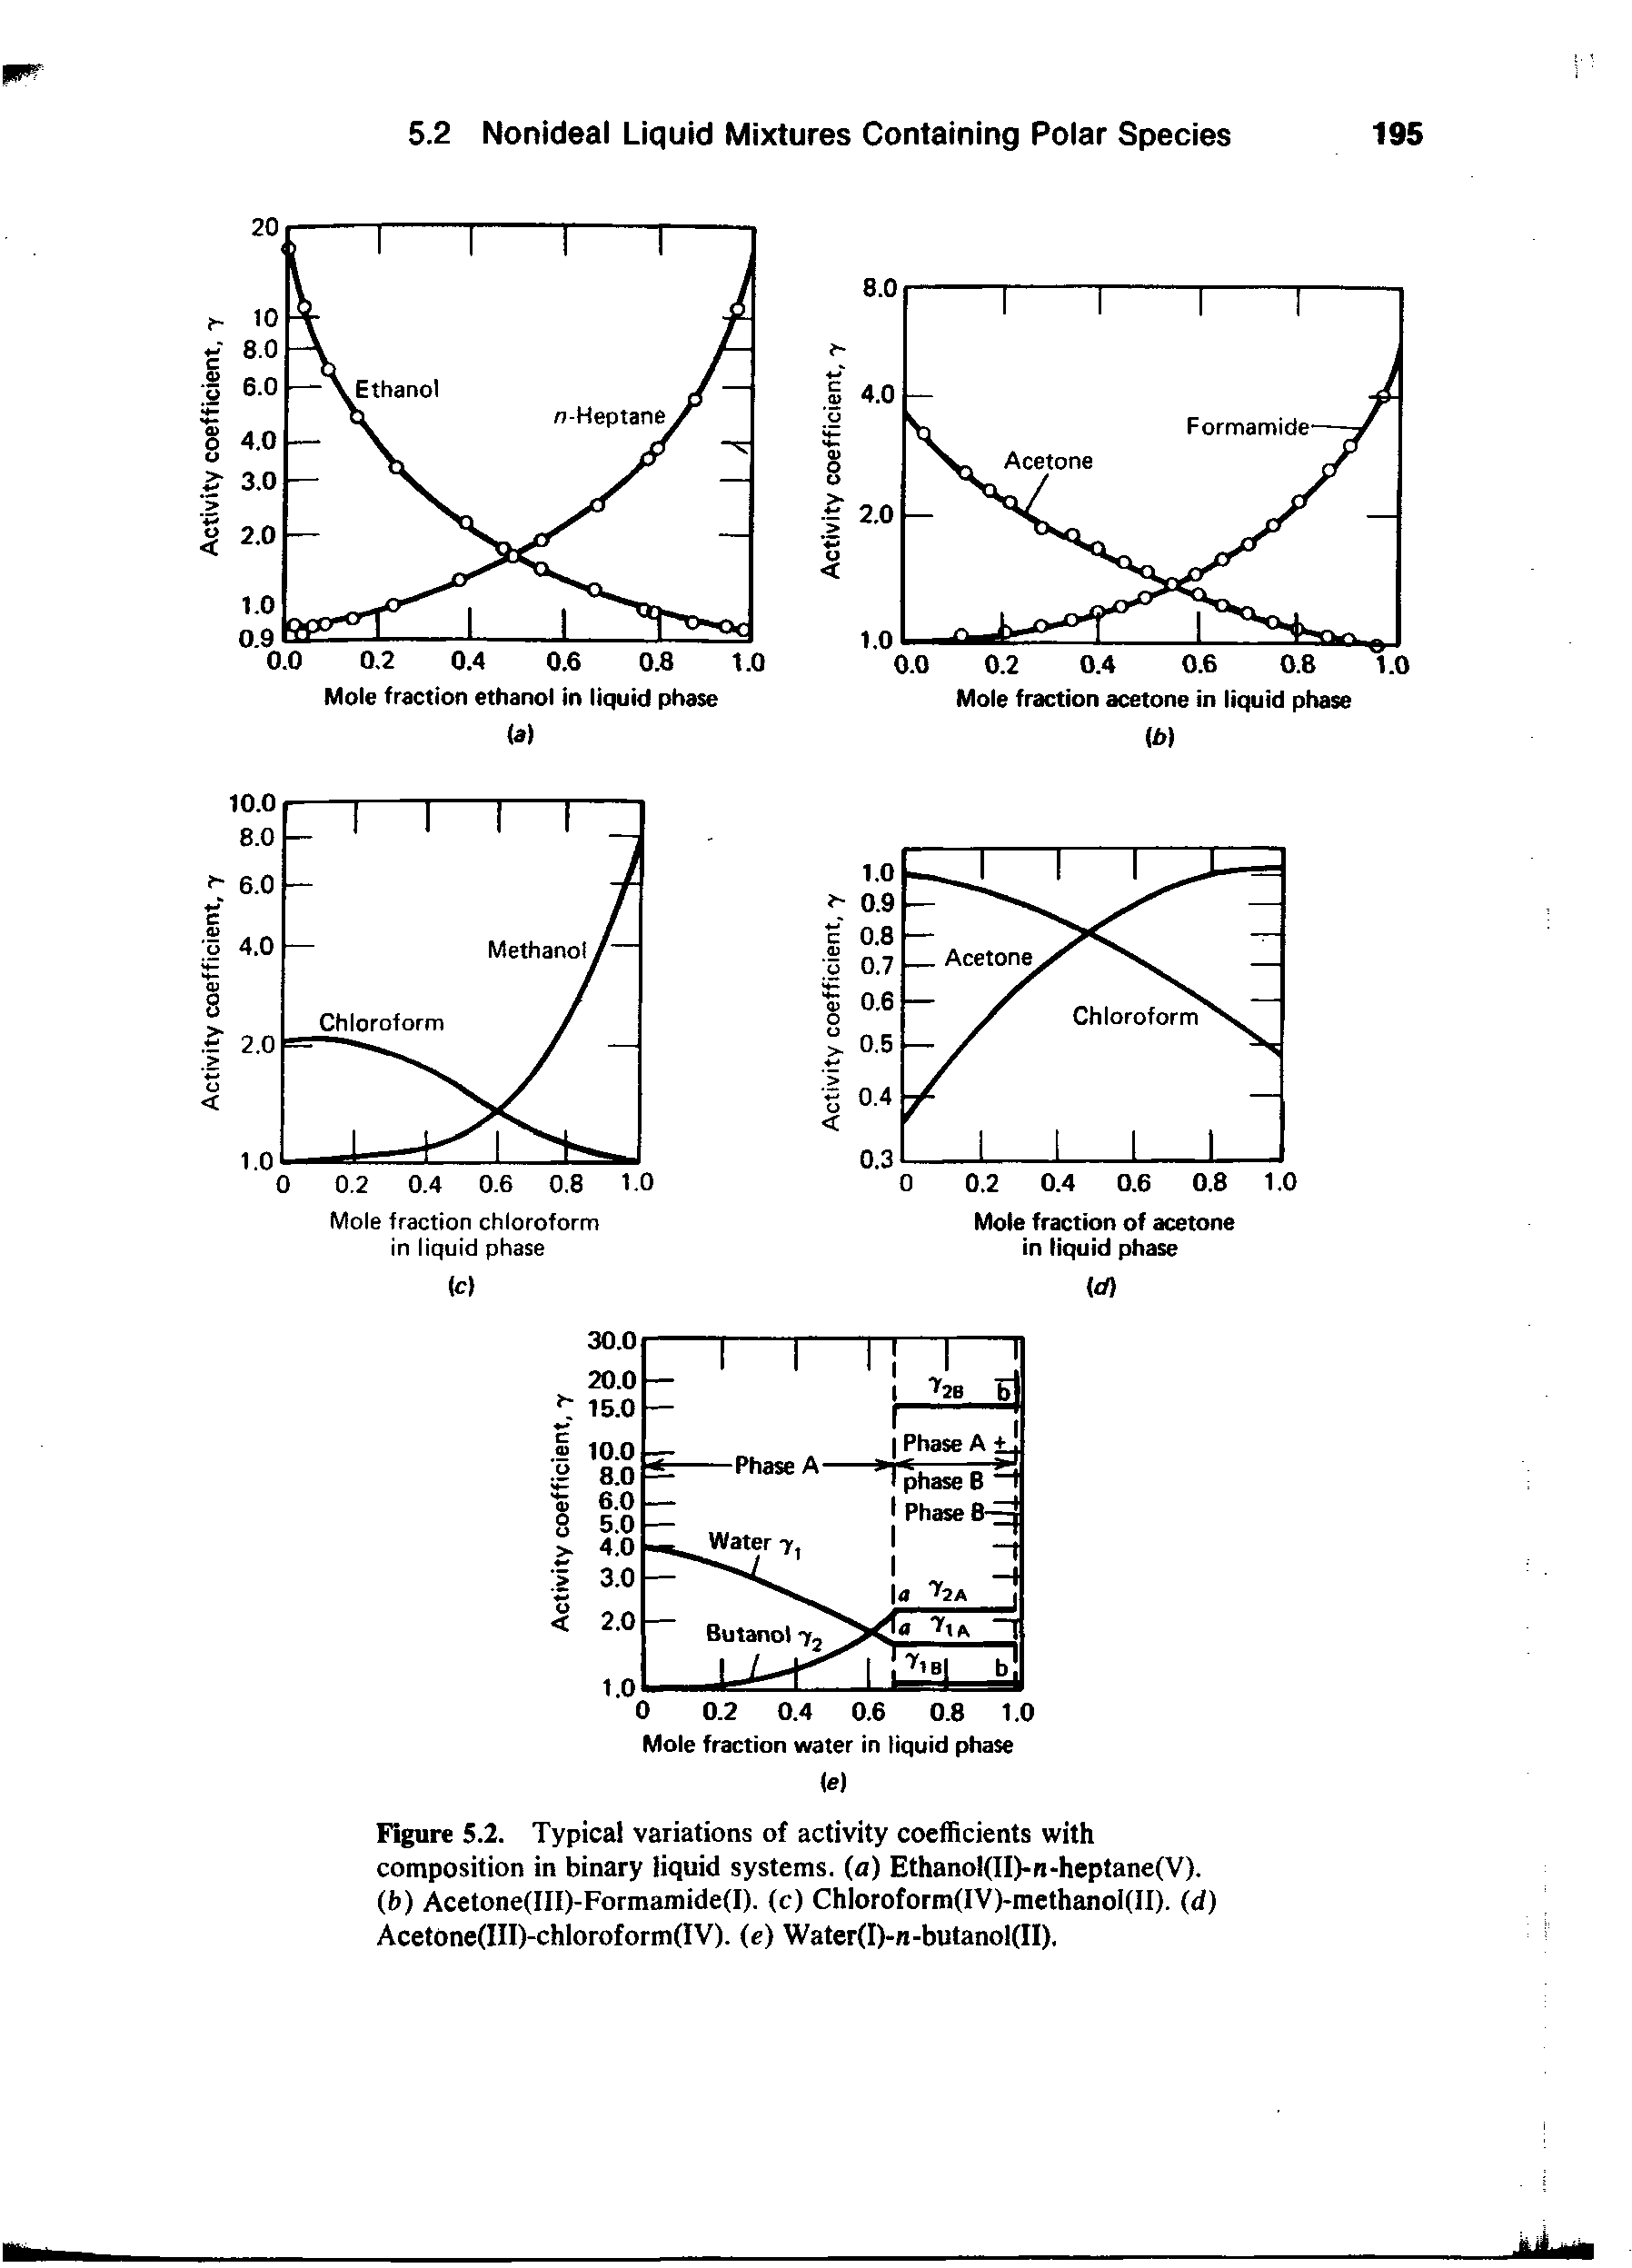 Figure 5.2. Typical variations of activity coefficients with composition in binary liquid systems, (a) Ethanol(II)-n-heptane(V). (b) Acetone(III)-Formamide(I). (c) Chloroform(IV)-methanoI(II). (d) Acetone(III)-chloroform(IV). (e) Water(I)-n-butanol(II).